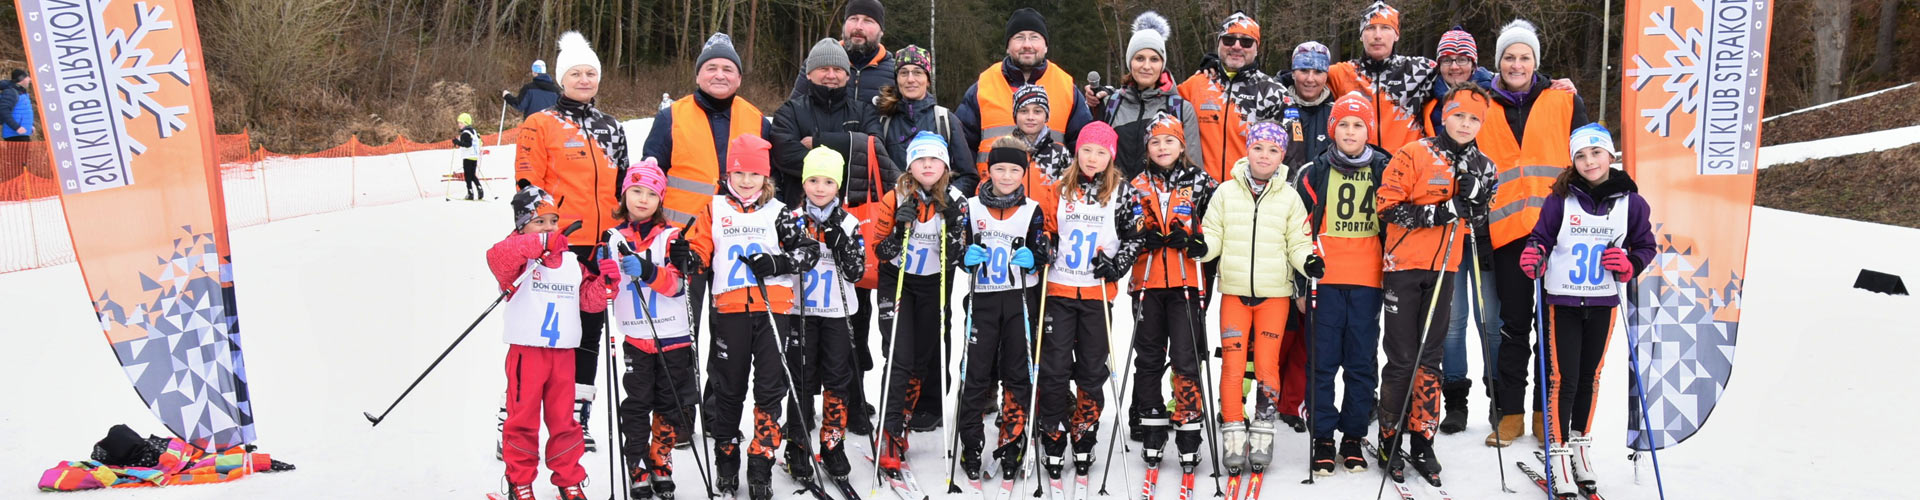 Ski klub Strakonice